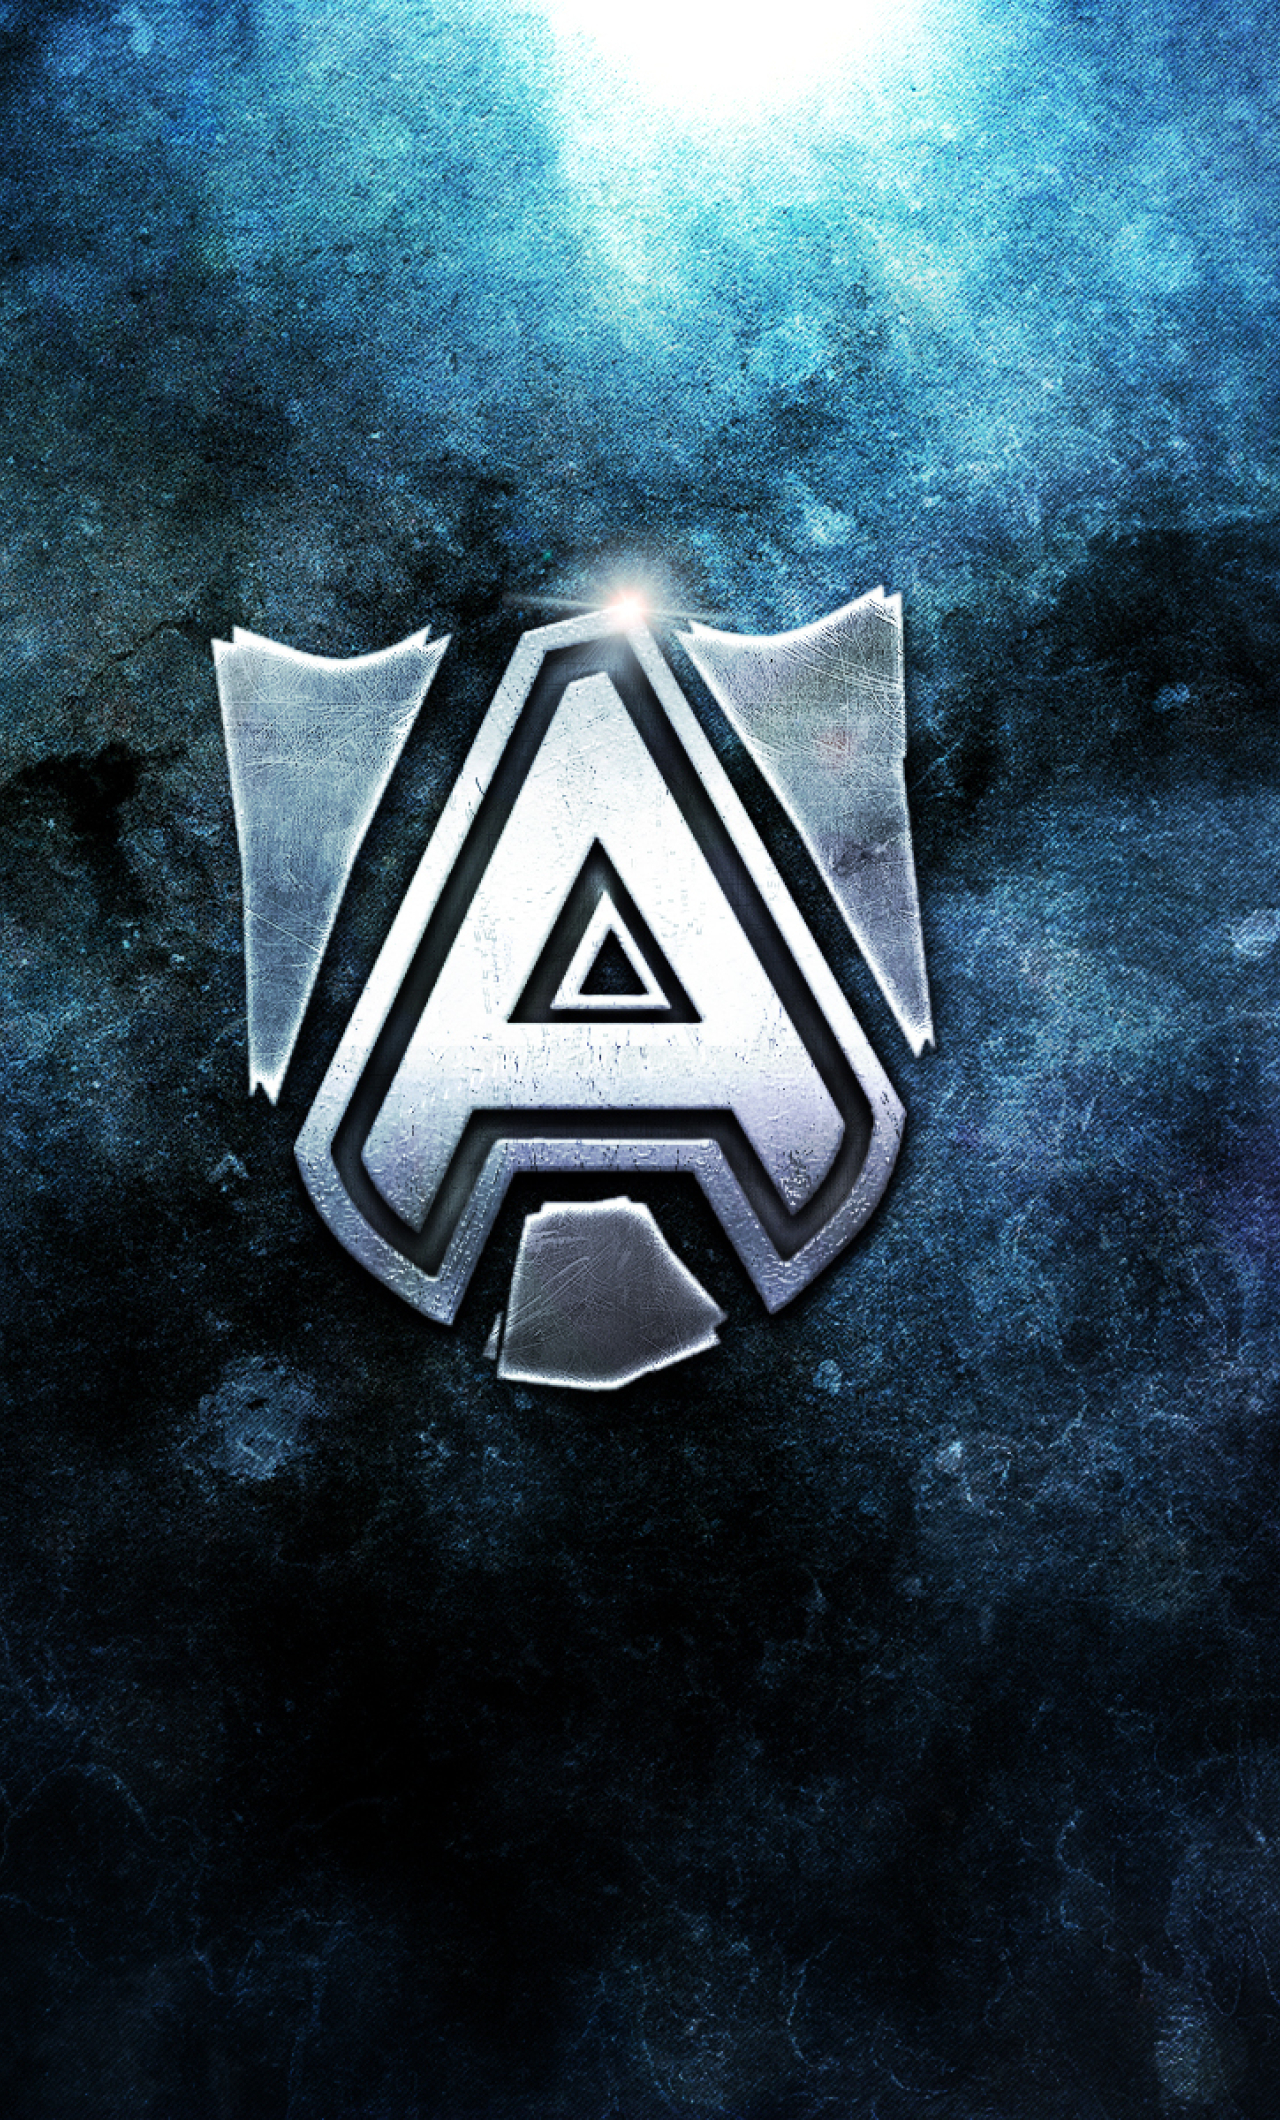 Alliance dota 2 logo фото 52